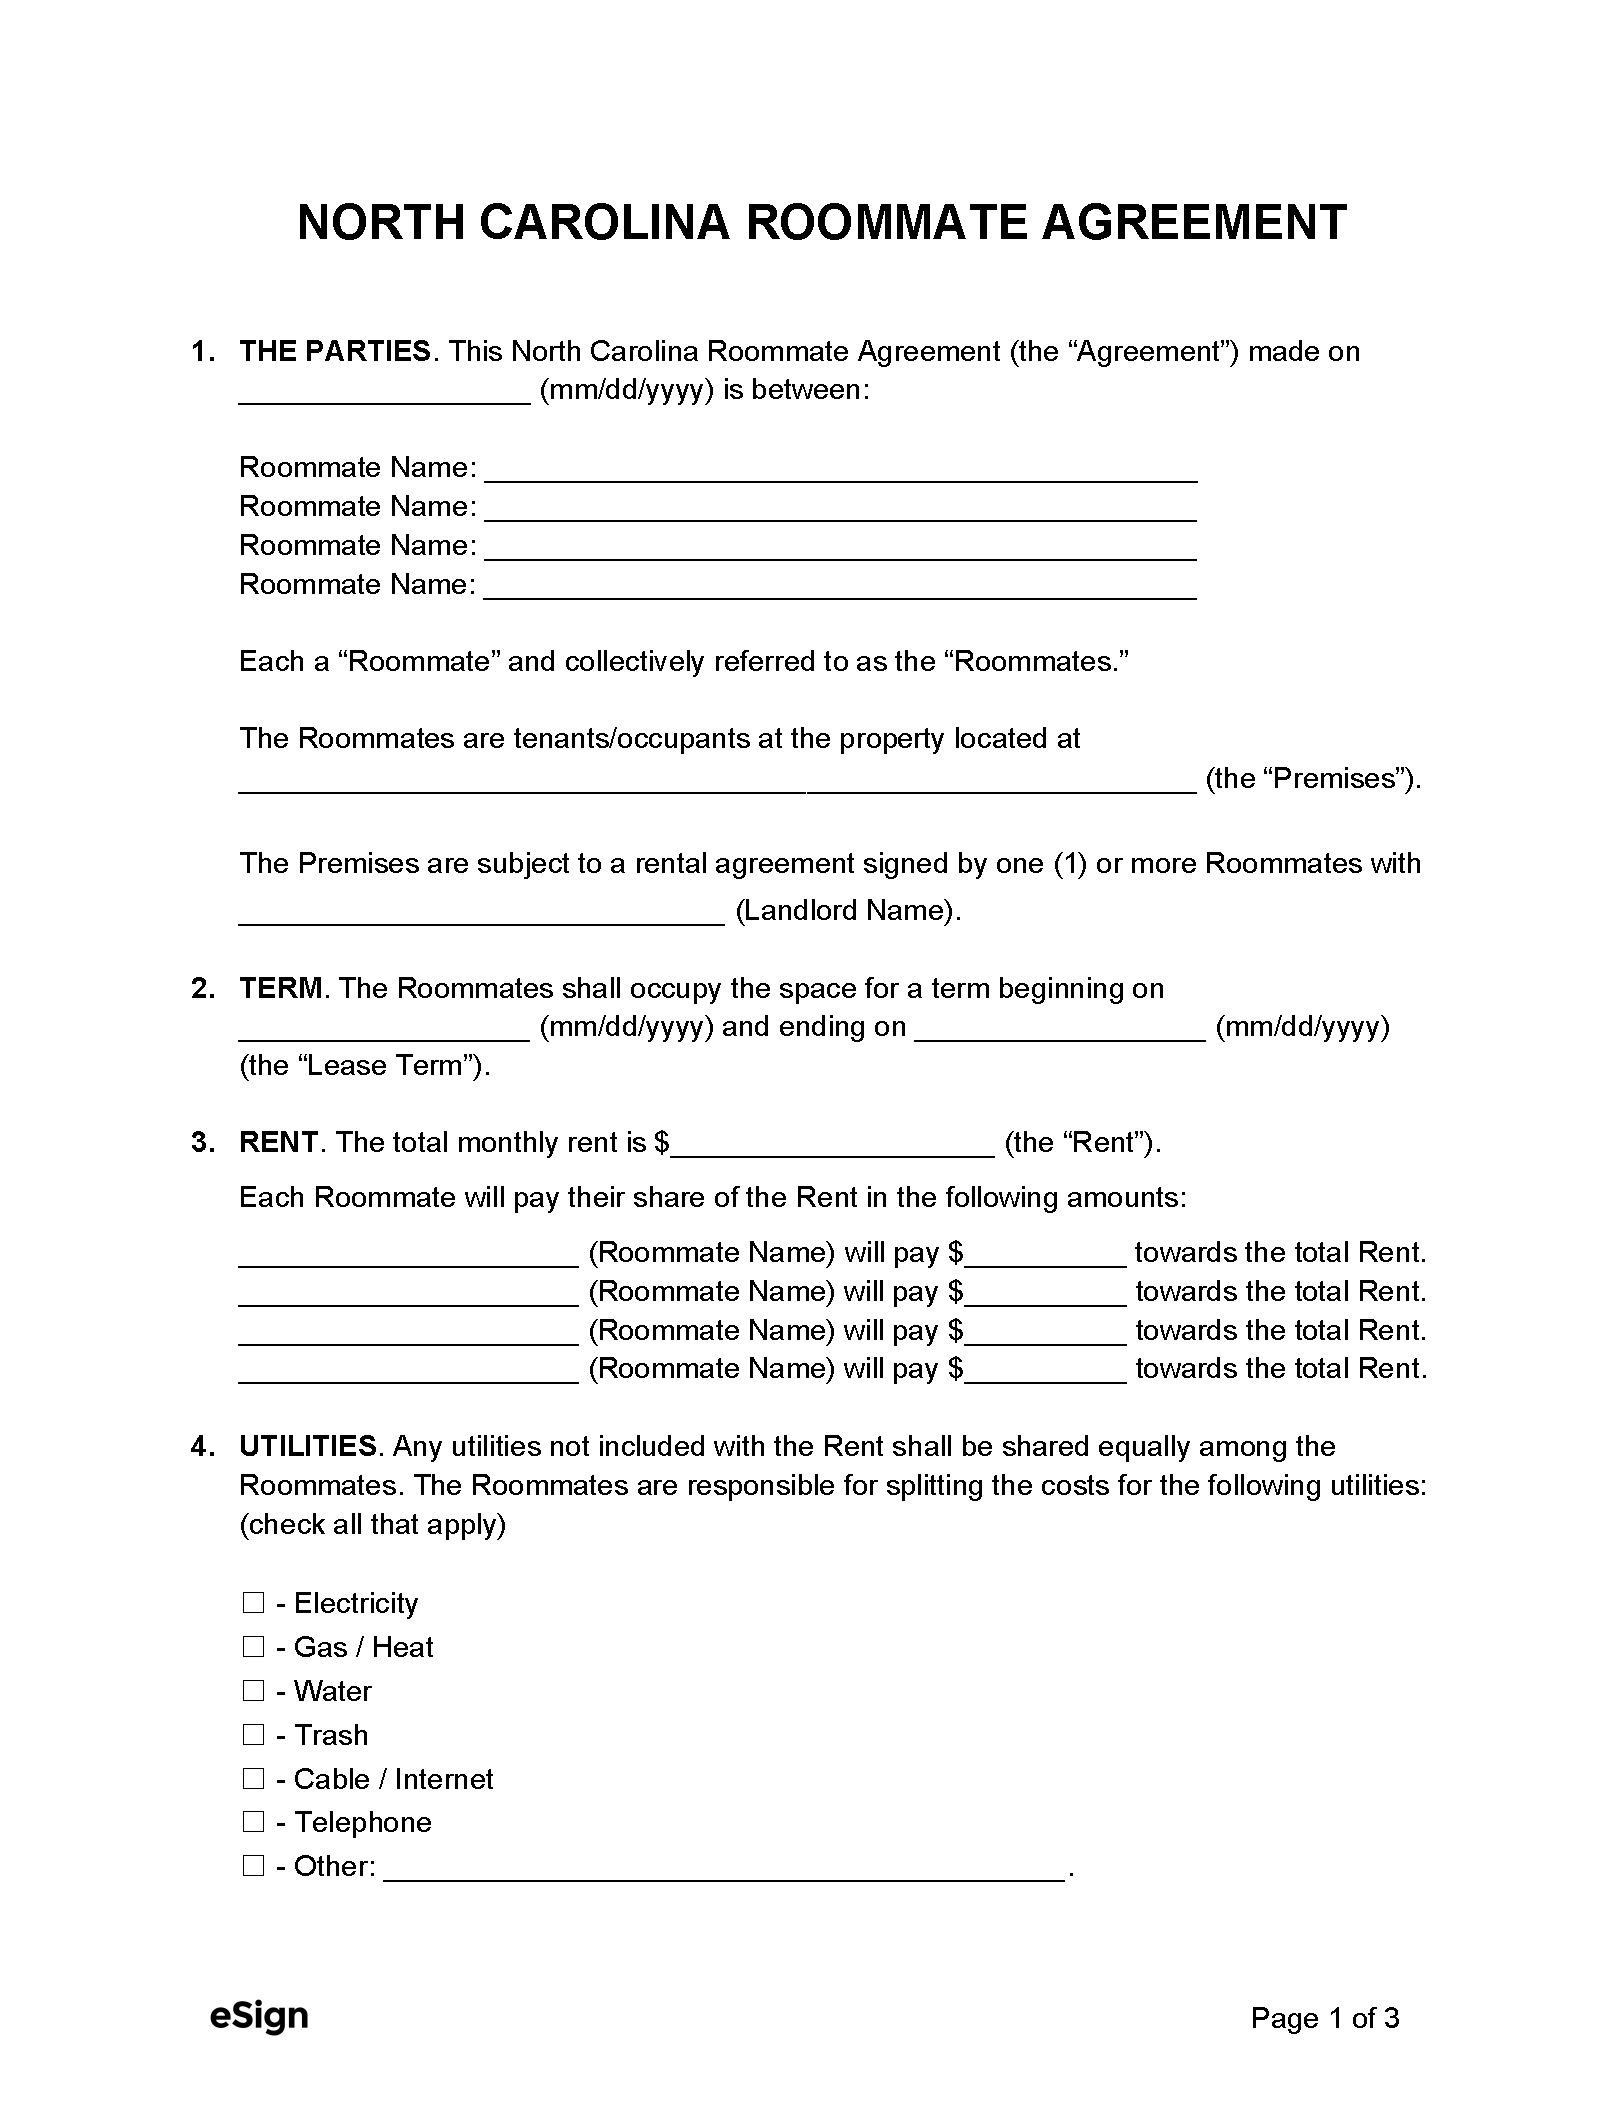 free-north-carolina-roommate-agreement-pdf-word